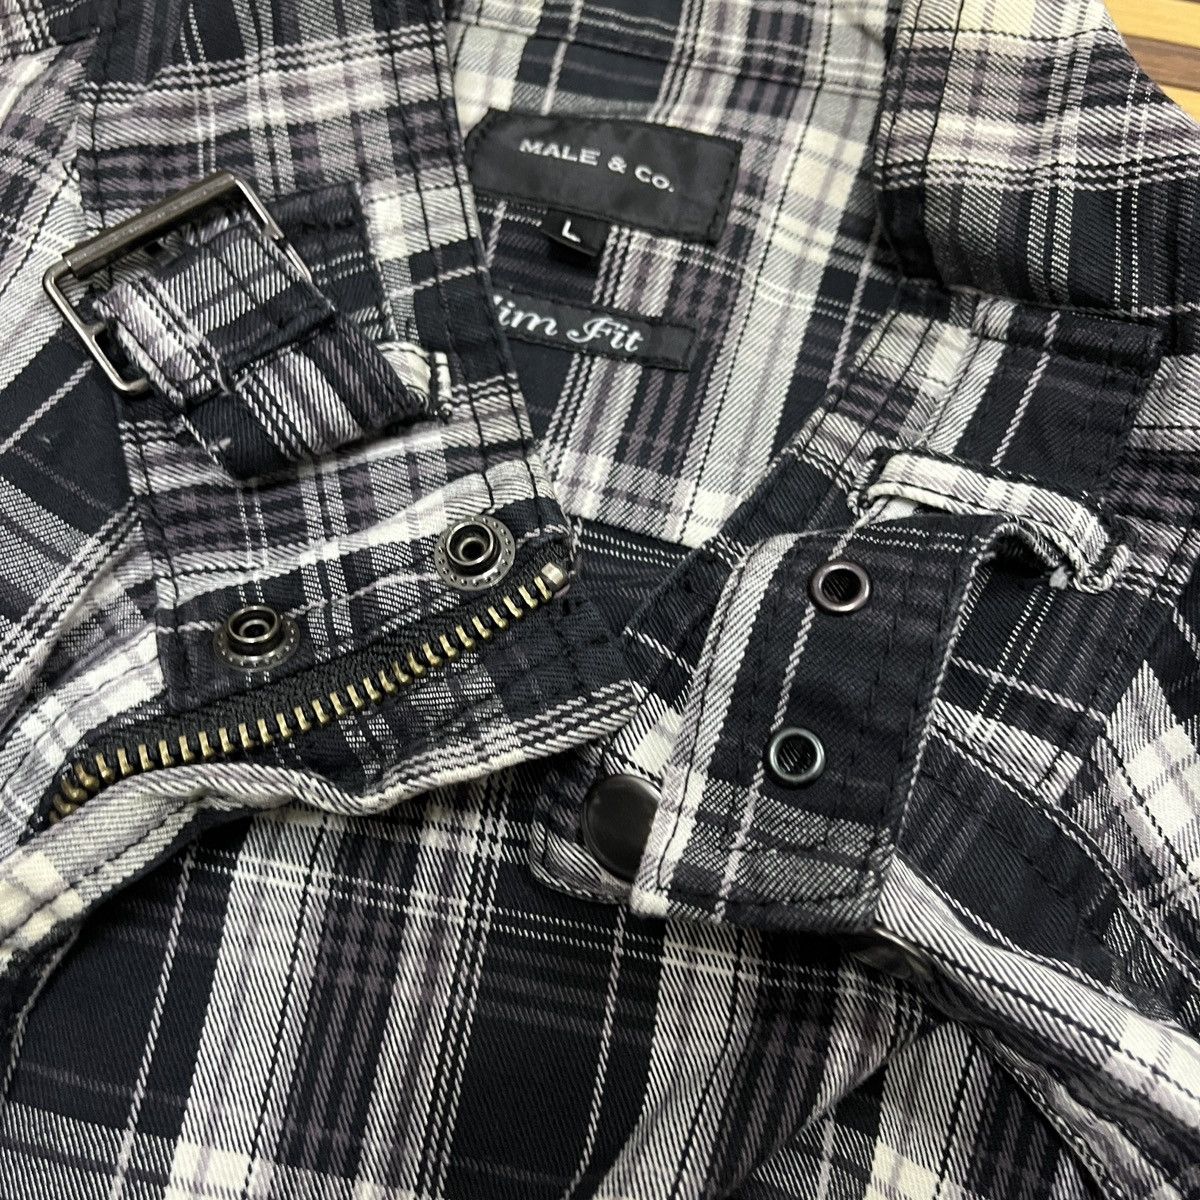 Vintage - Male & Co Slim Fit Flannel Matsuda Shirt Zipper - 18